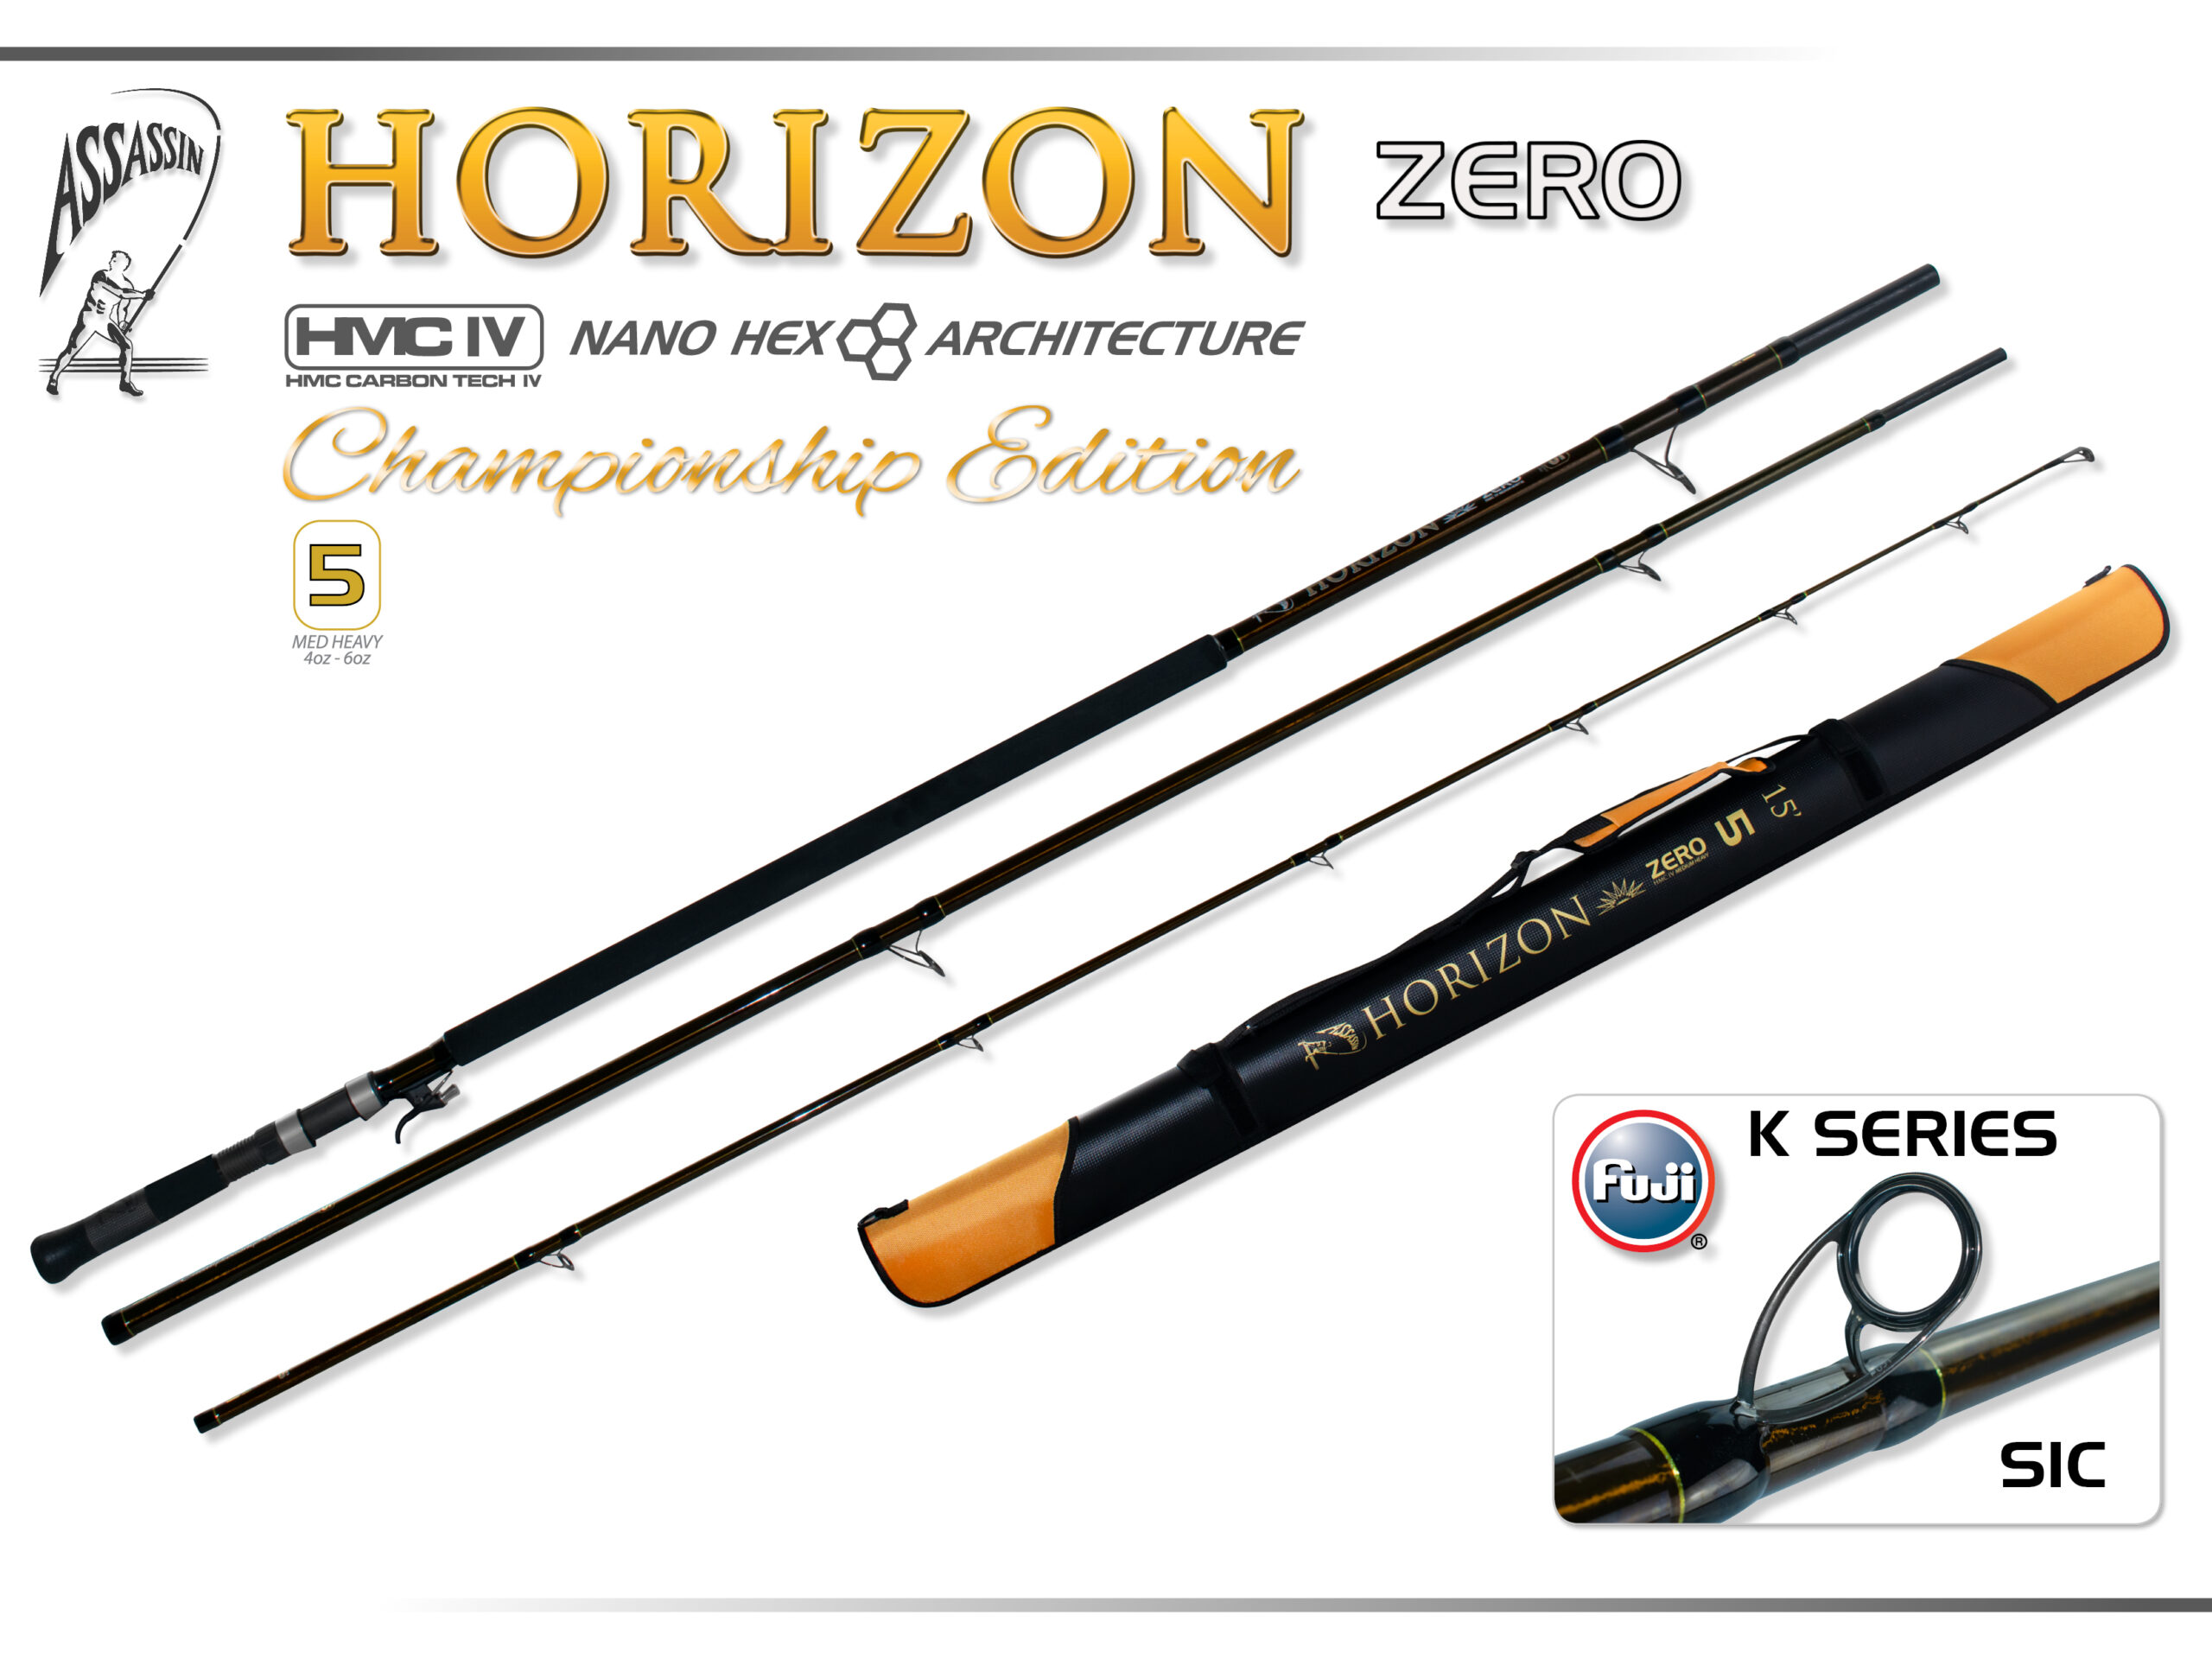 Horizon Zero Championship Edition